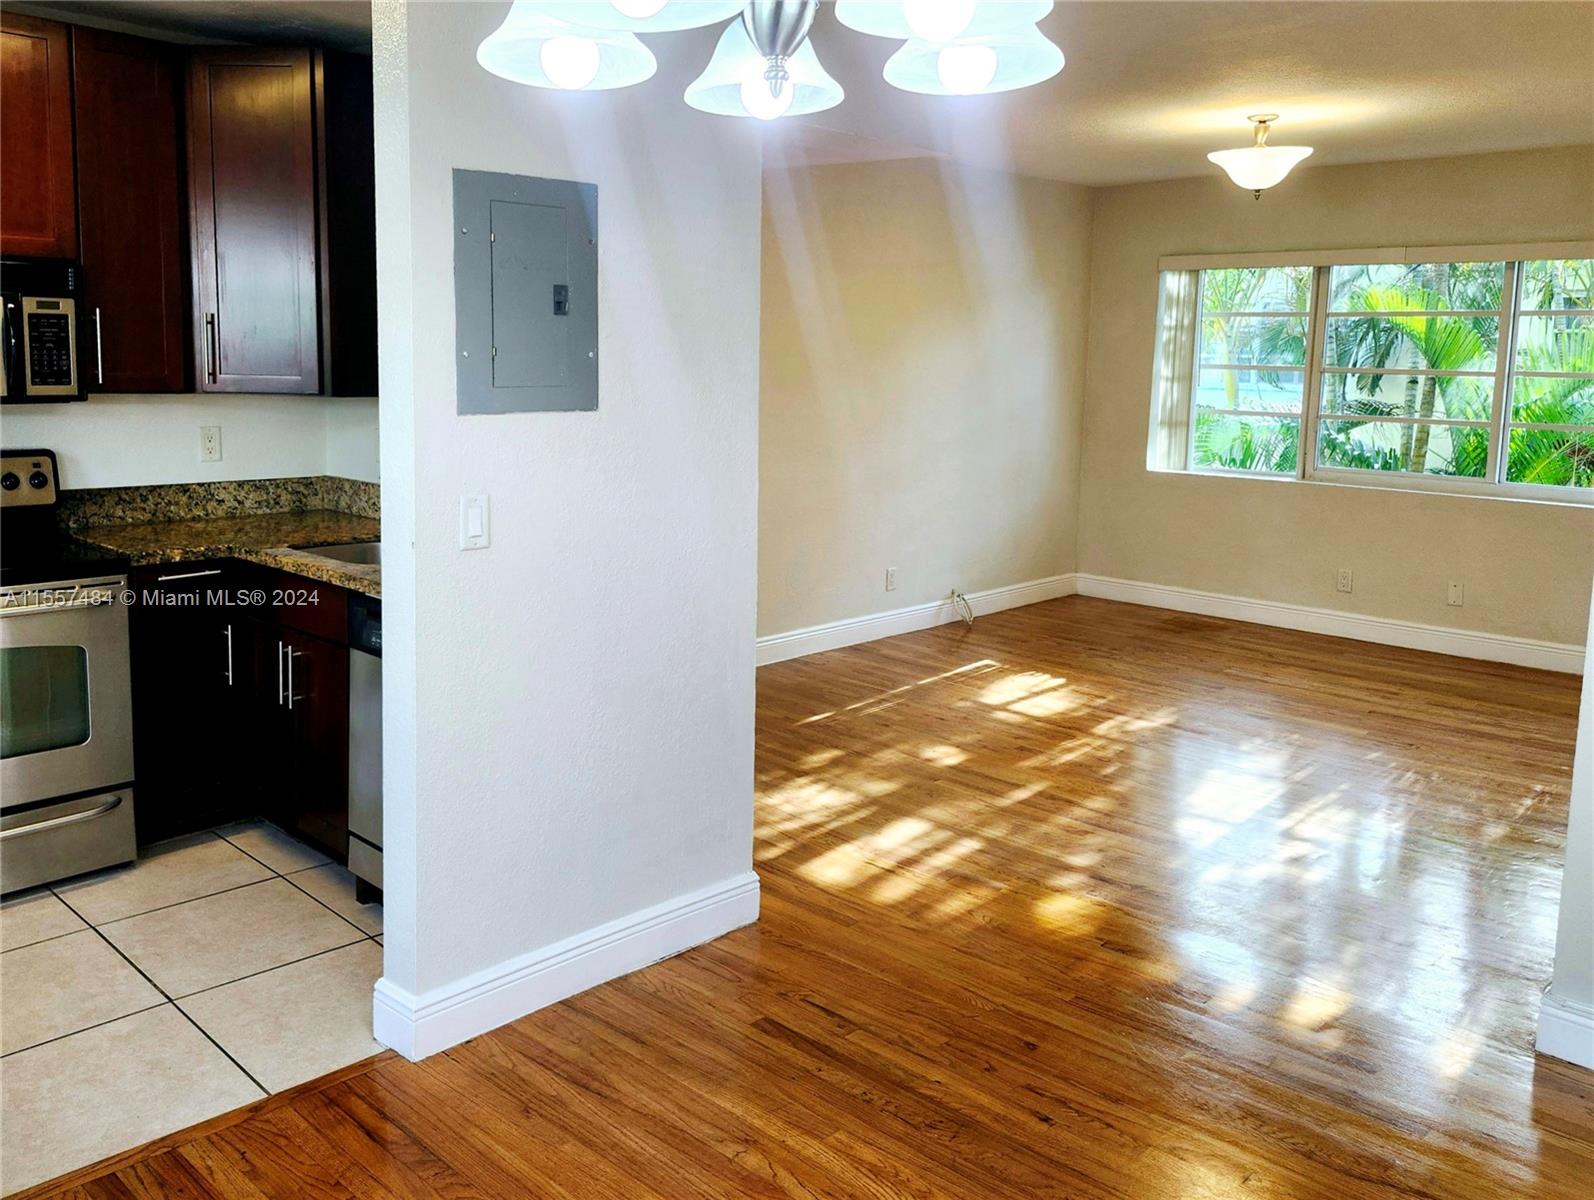 Rental Property at 340 84th St 6, Miami Beach, Miami-Dade County, Florida - Bedrooms: 2 
Bathrooms: 1  - $2,400 MO.